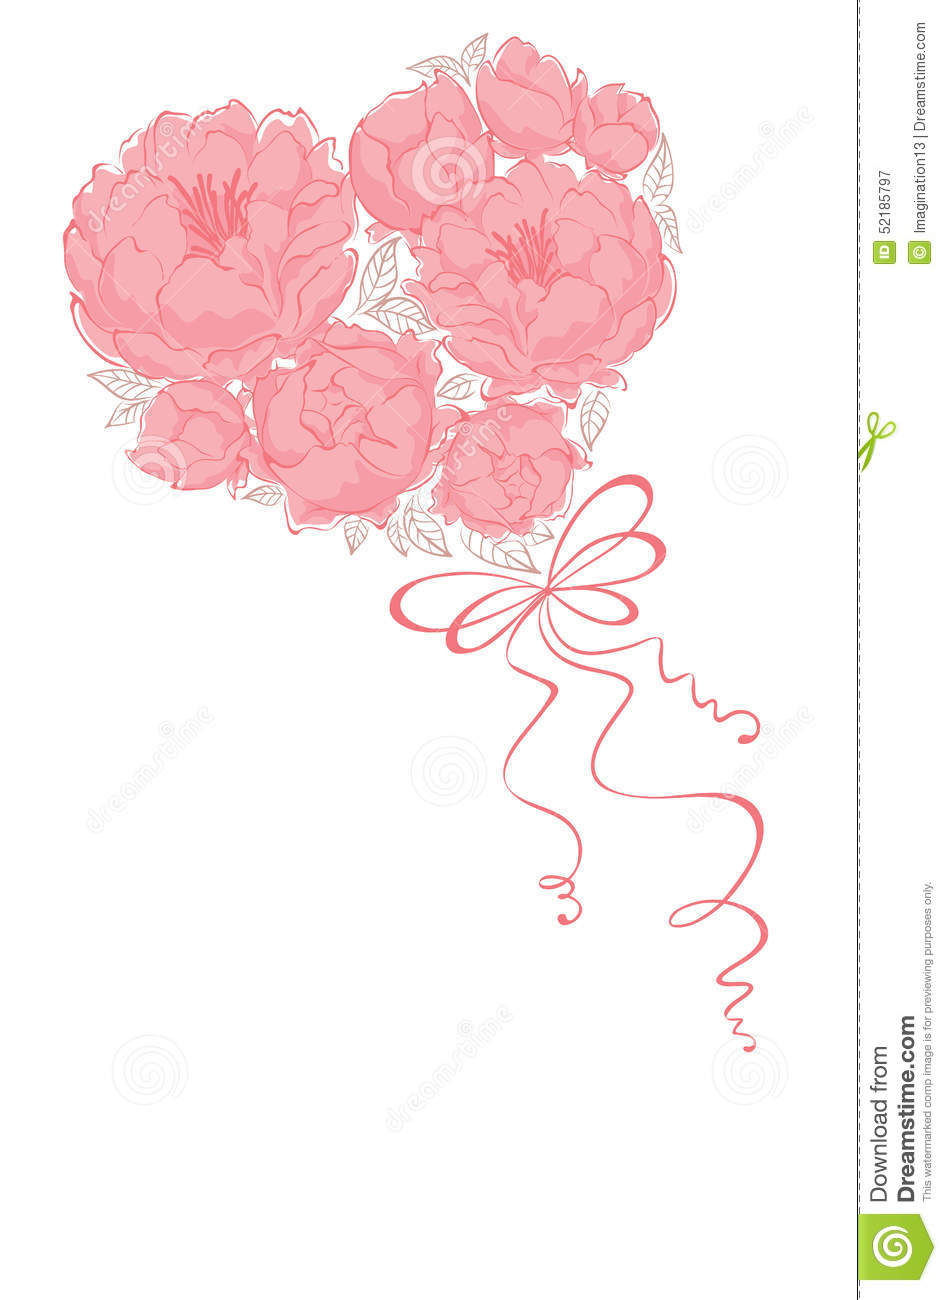 Bridal Bouquet Illustrations